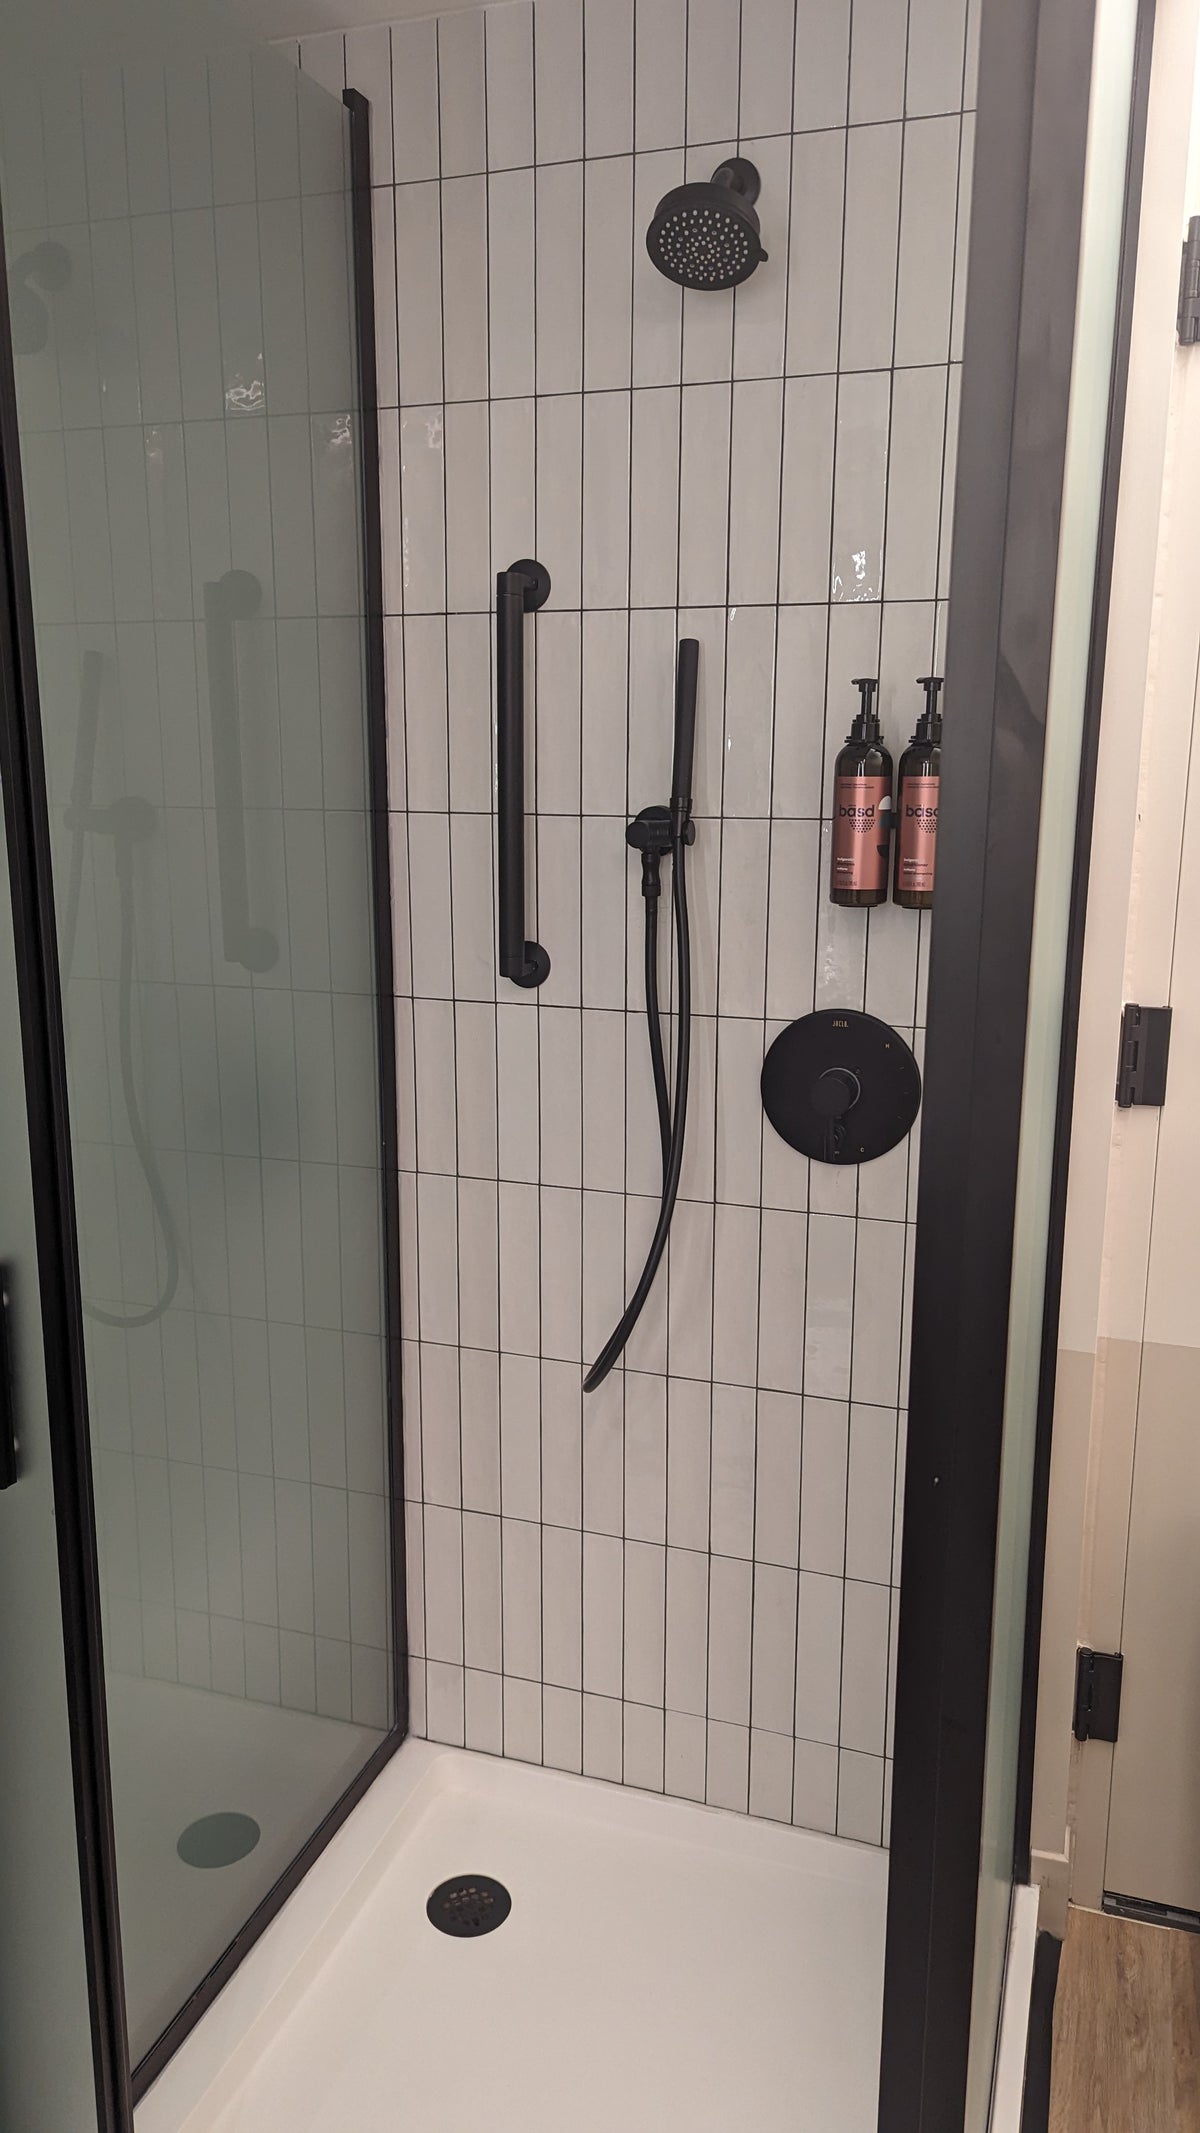 Motto by Hilton New York City Times Square guestroom bathroom shower enclosure